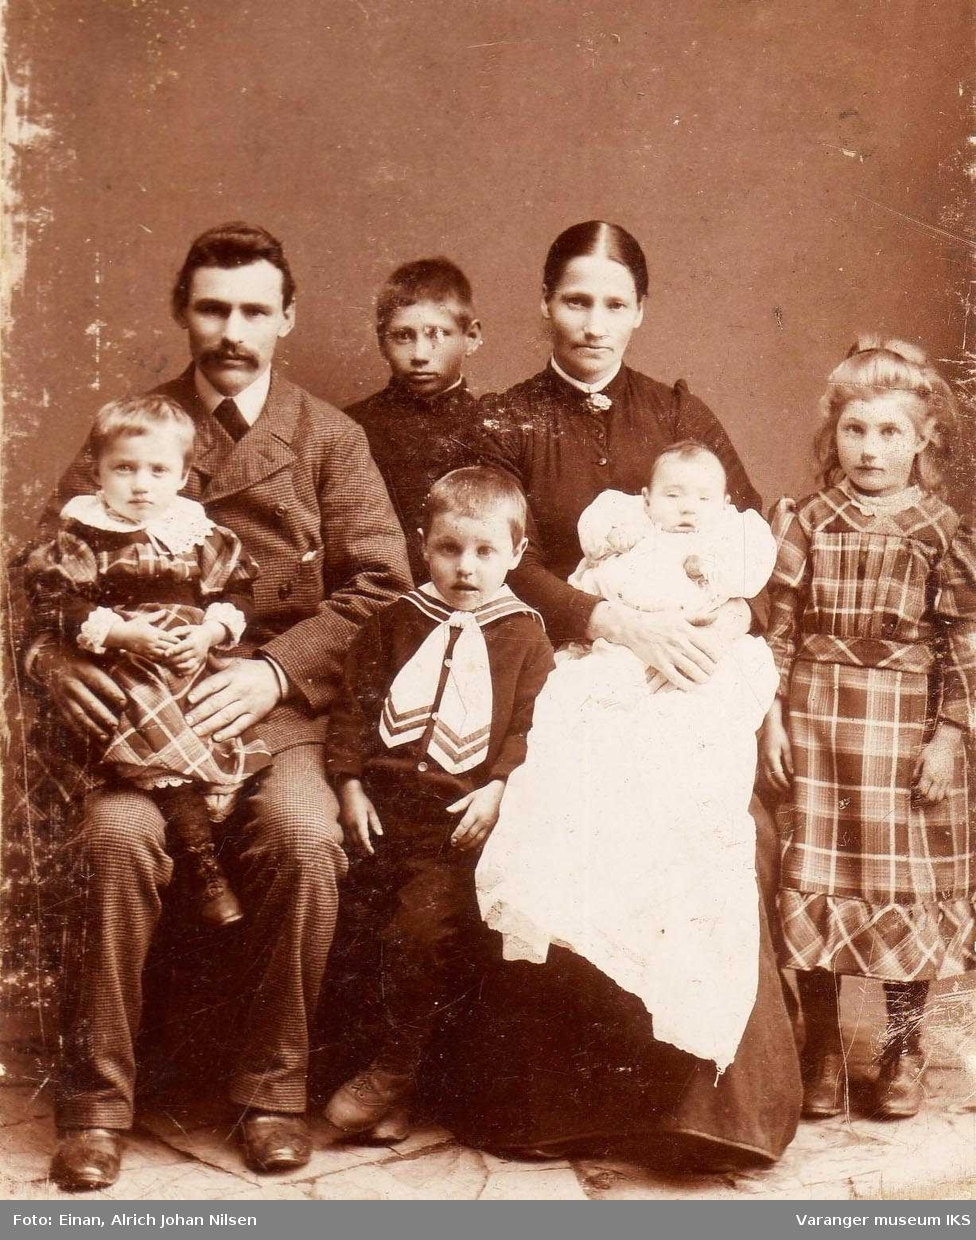 Familien Frostmann i Vadsø i 1891. Ulrik Frithjof og Hanna Martha Gurine med 5 barn, den yngste Hanna i dåpskjole.